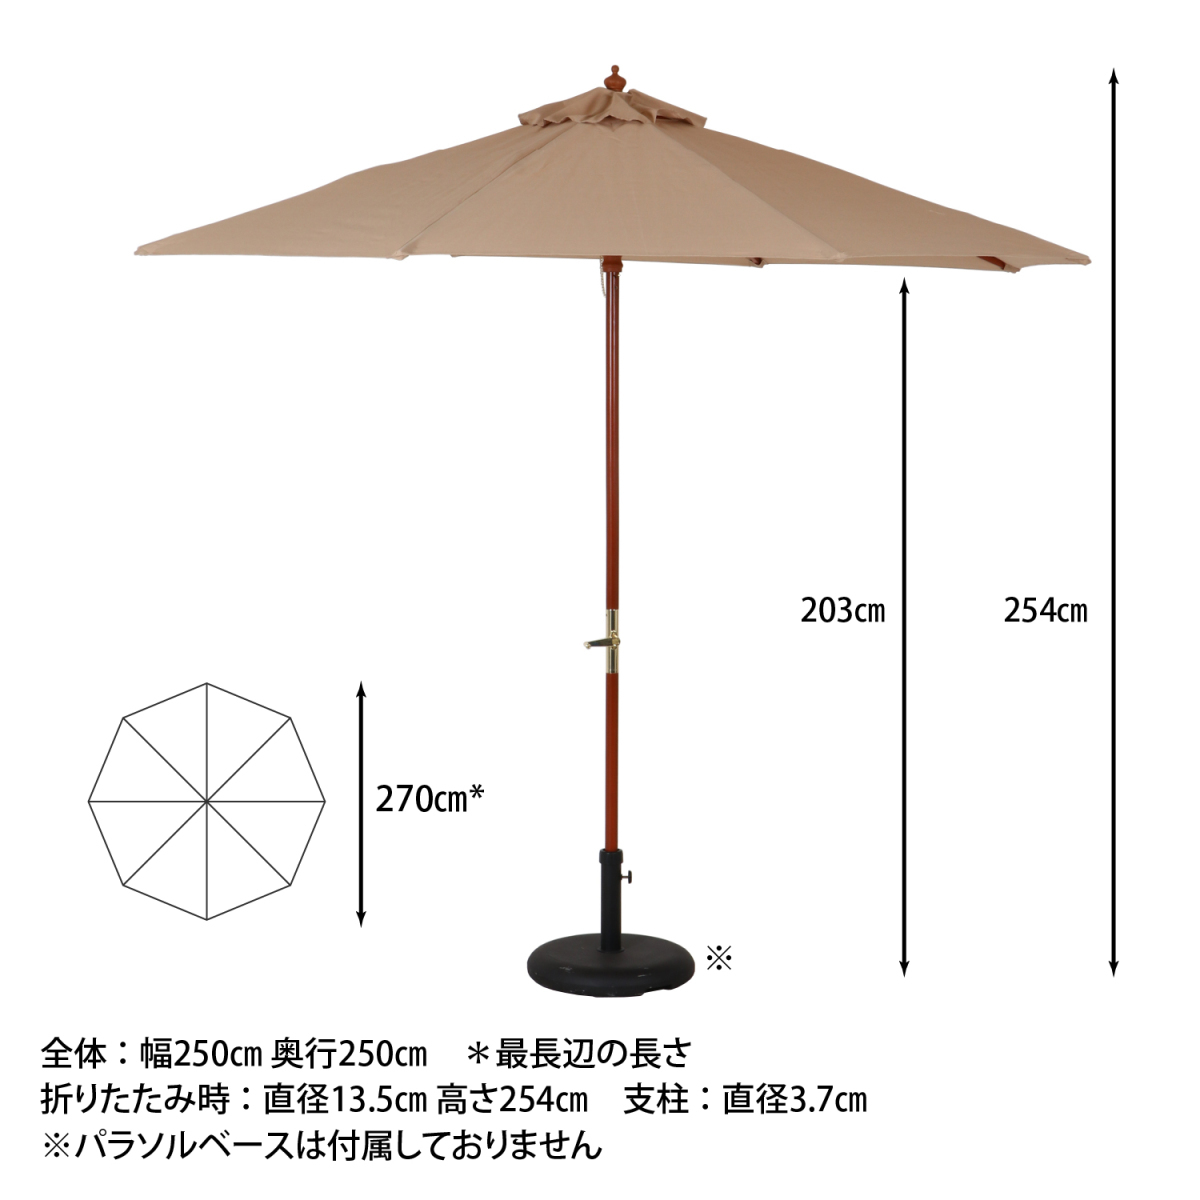  garden parasol width 270cm ivory [ new goods ][ free shipping ]( Hokkaido Okinawa remote island postage separately )